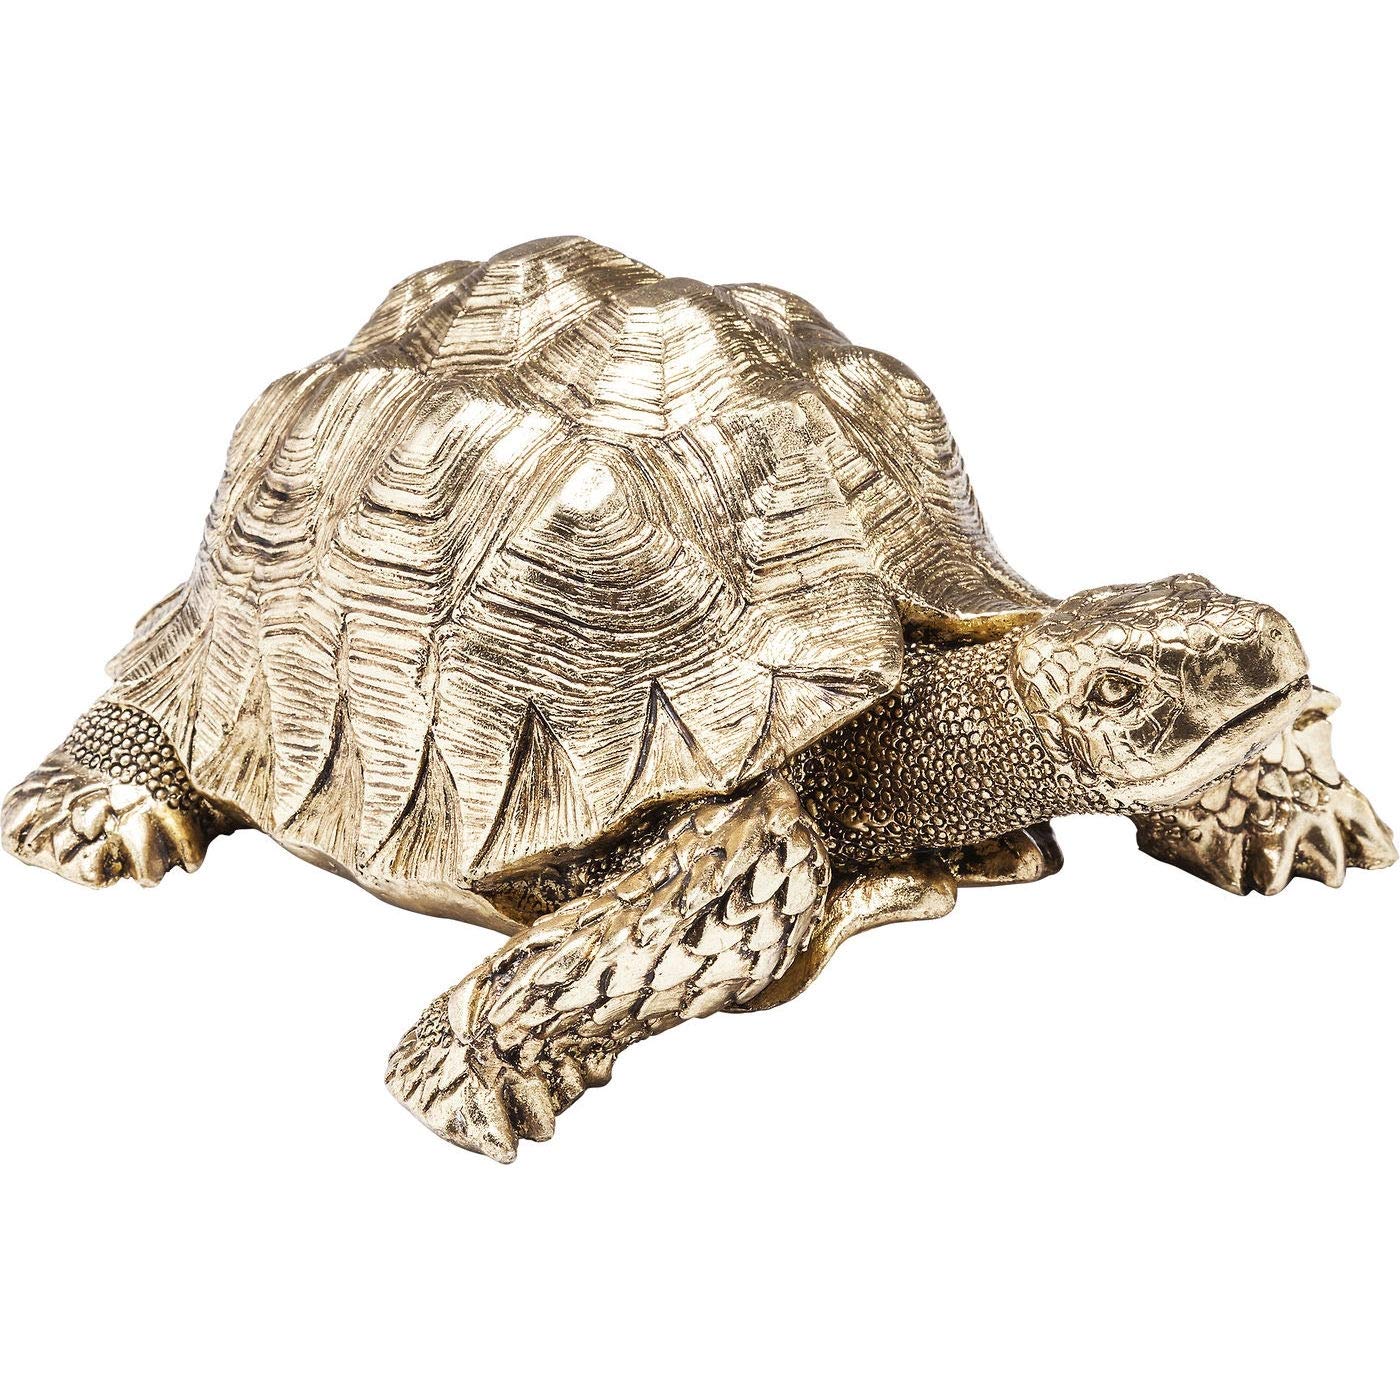 Kare Design Deko Figur Turtle, Gold, Deko Objekt, Schildkröte, 11x26x20 cm (H/B/T)